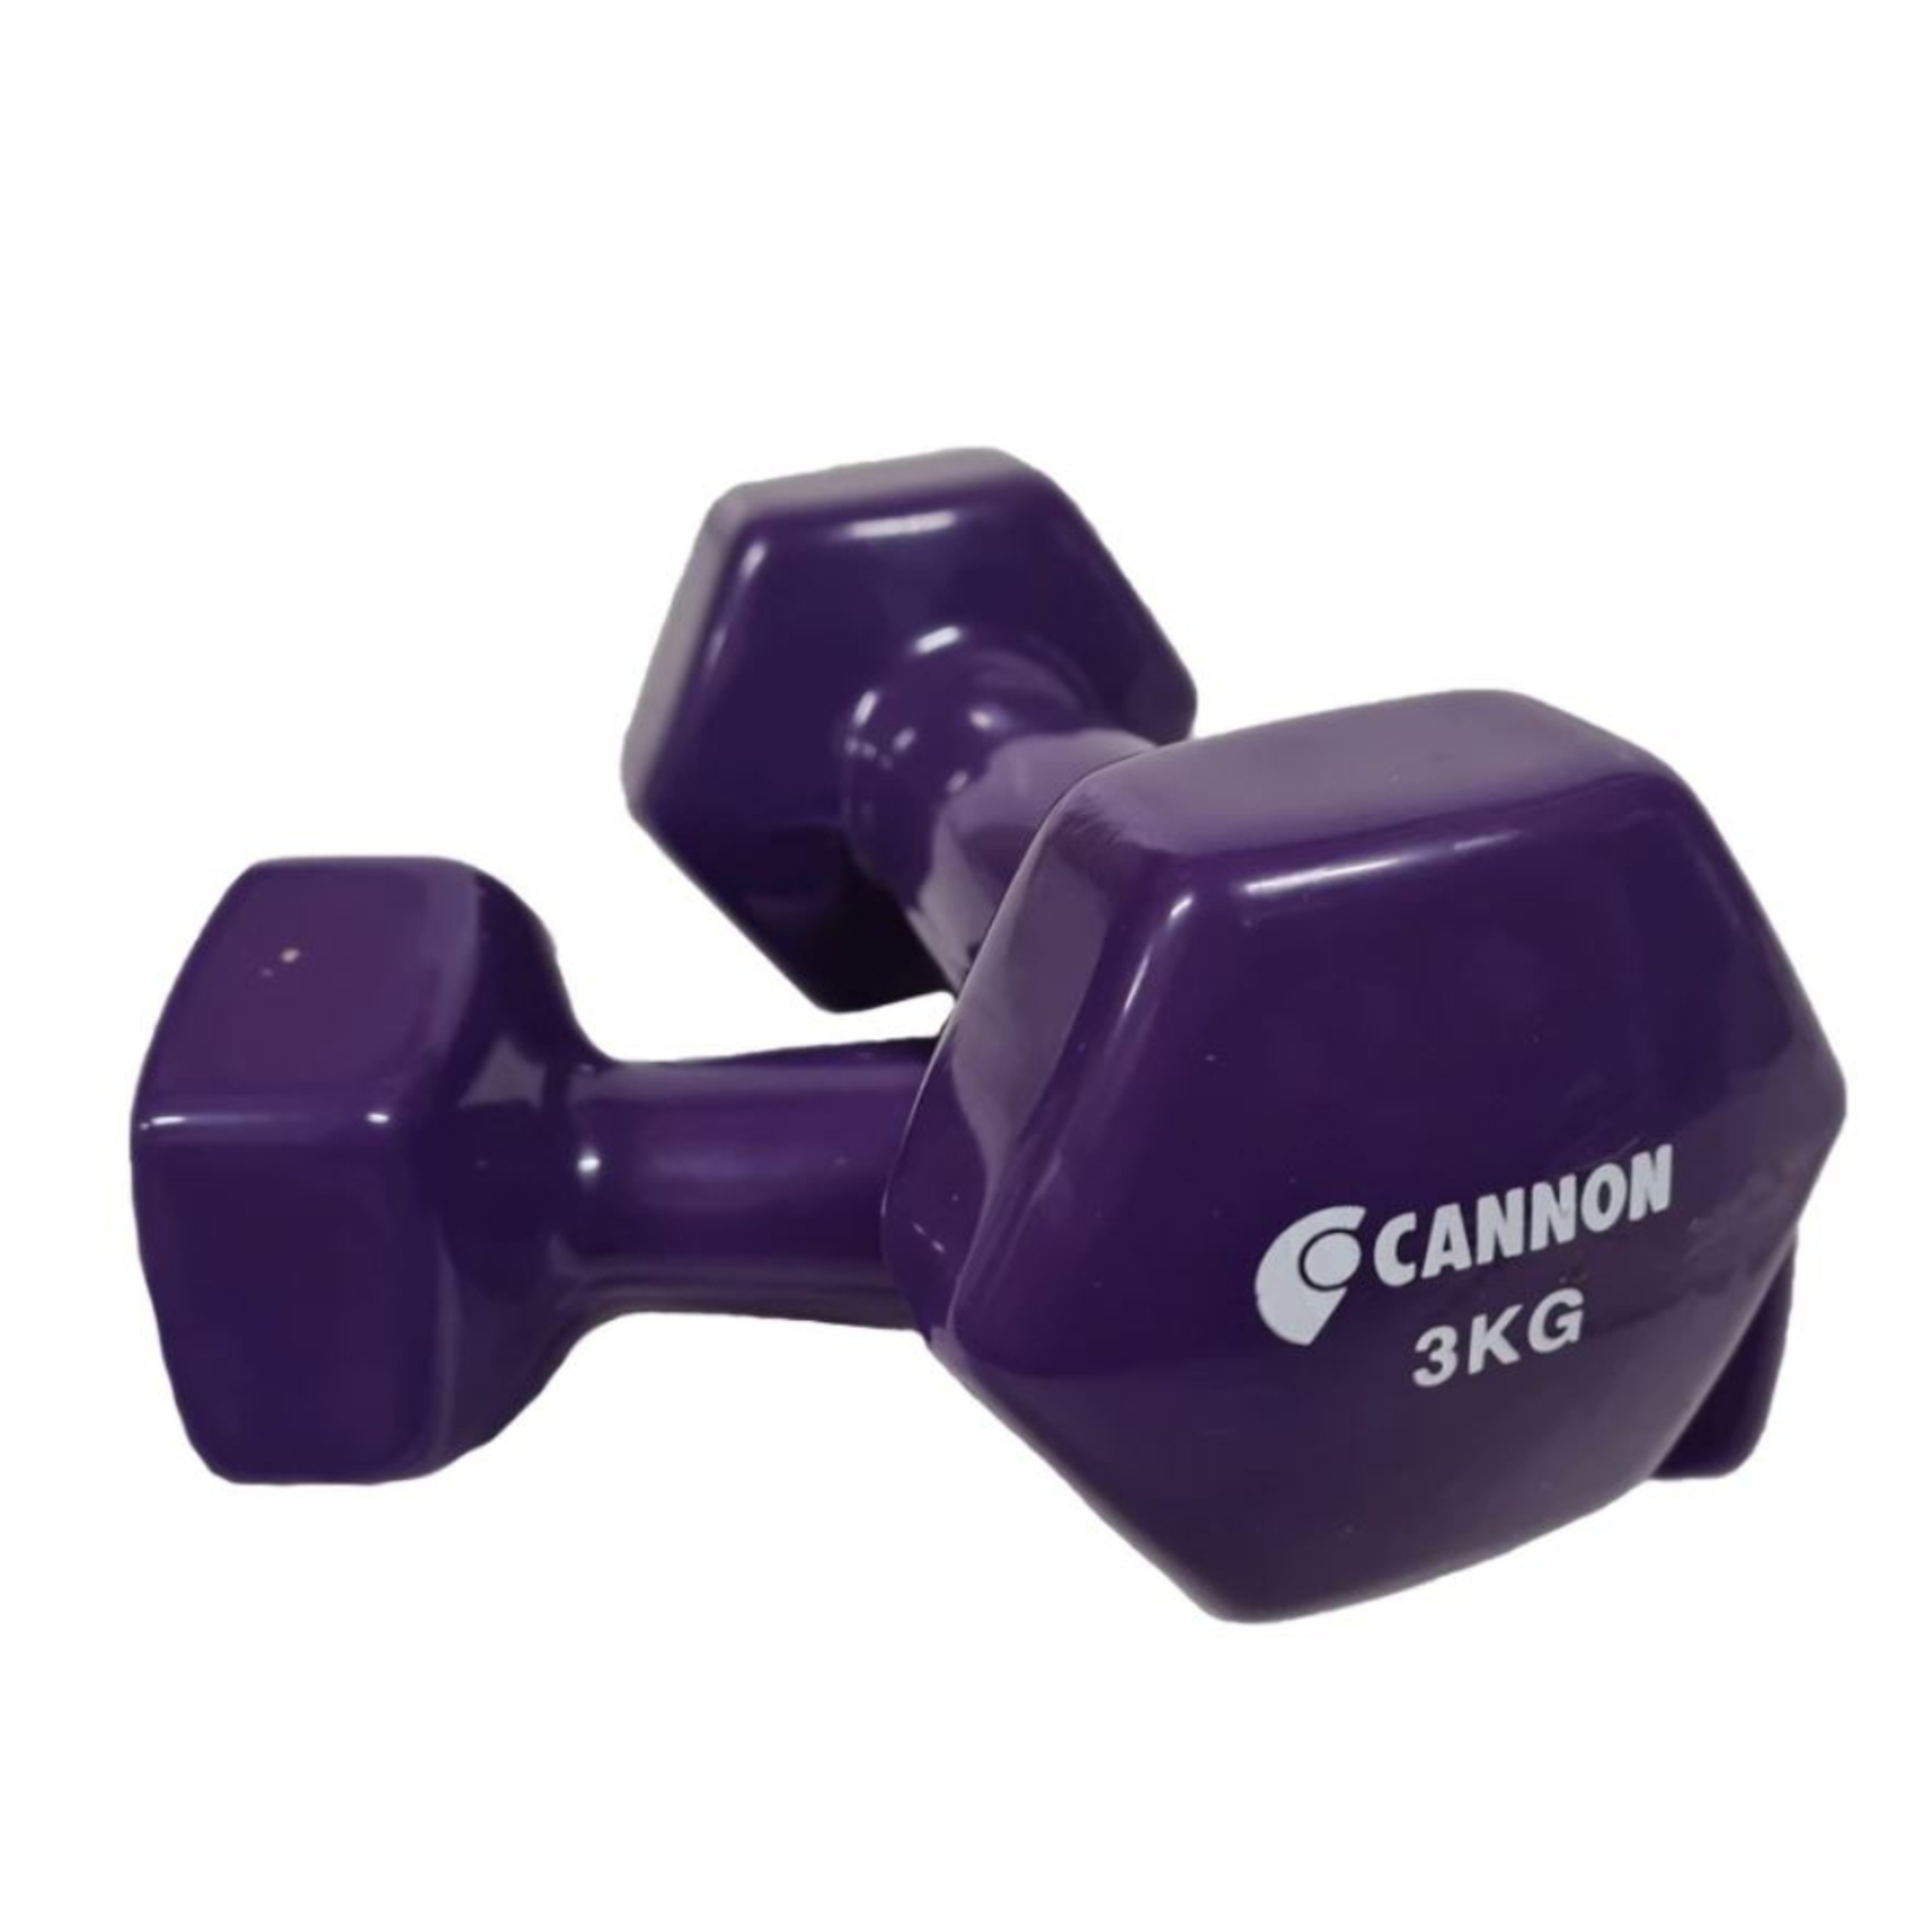 Set De 2 Pesos De Vinil 3kg Cannon - violeta - 